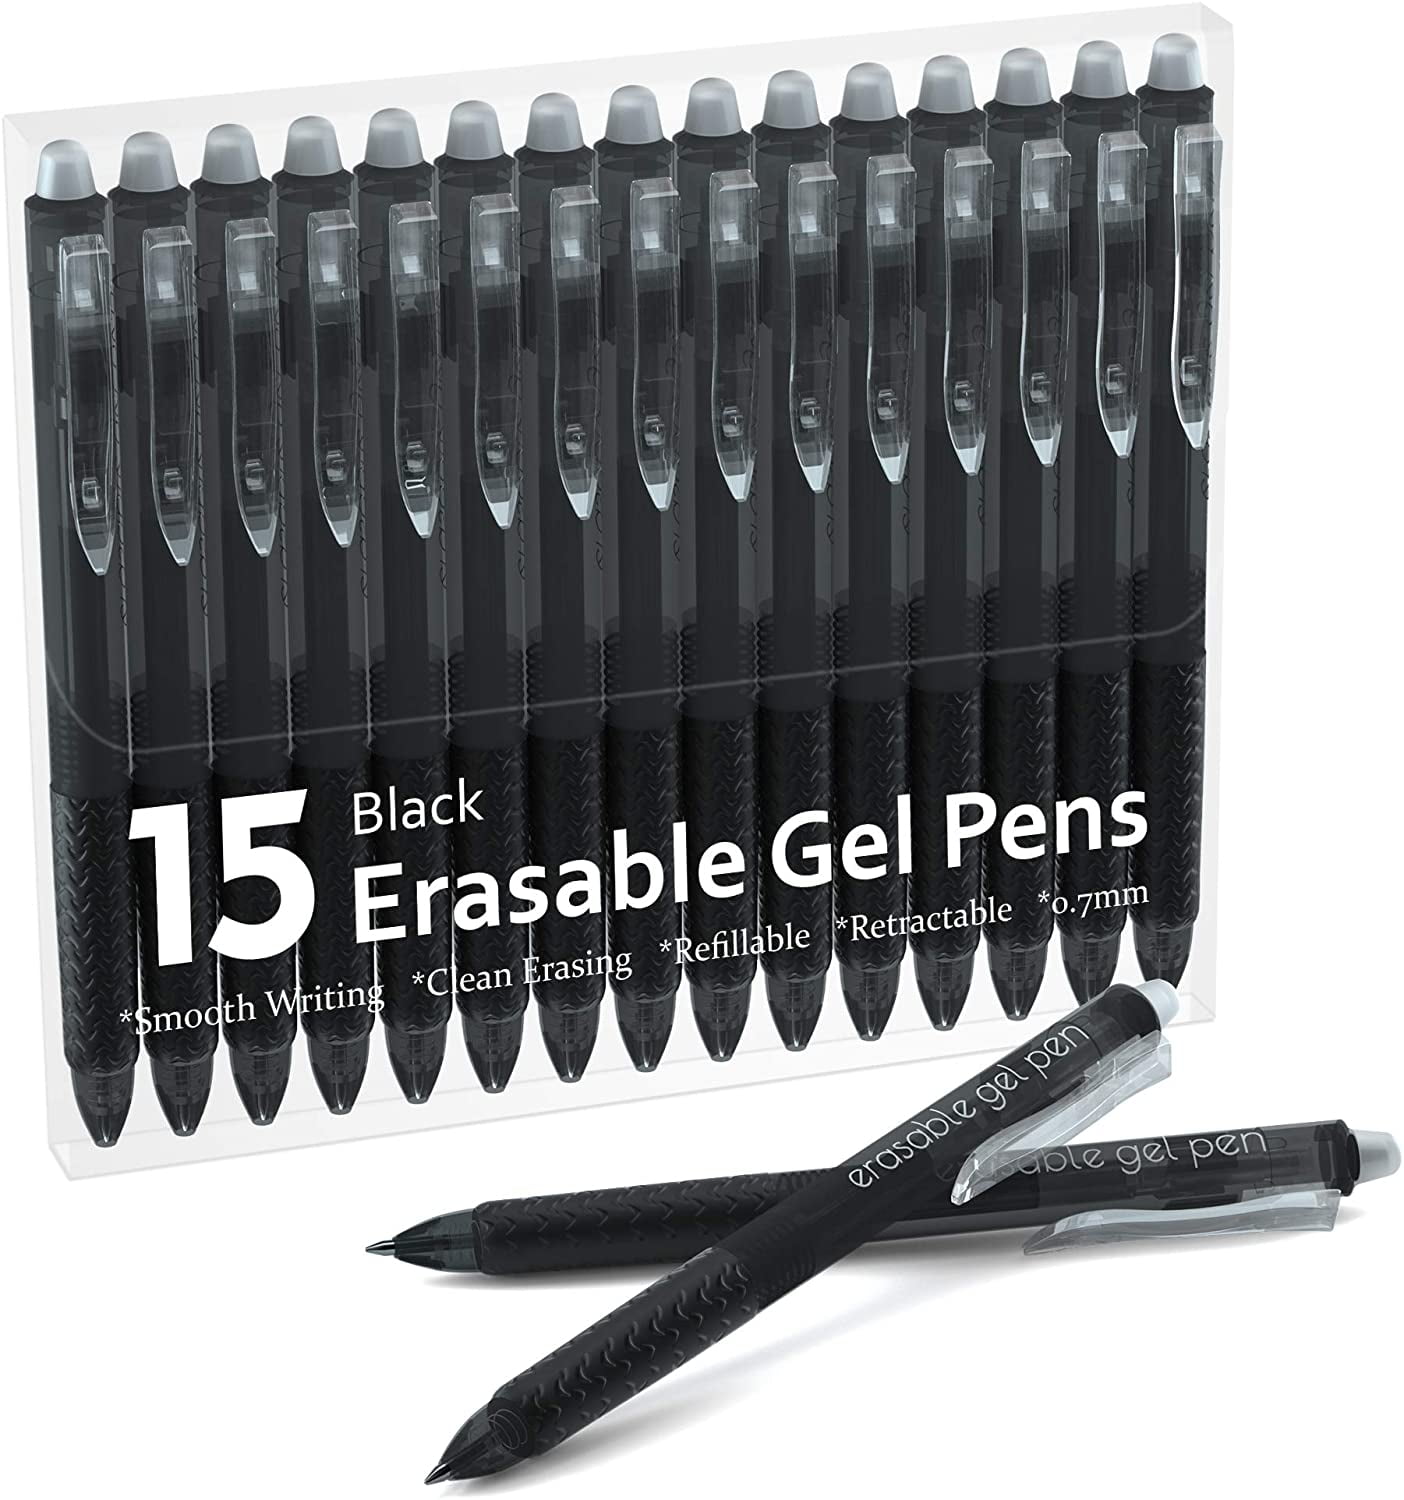 Allary Heat Erasable Pen Black